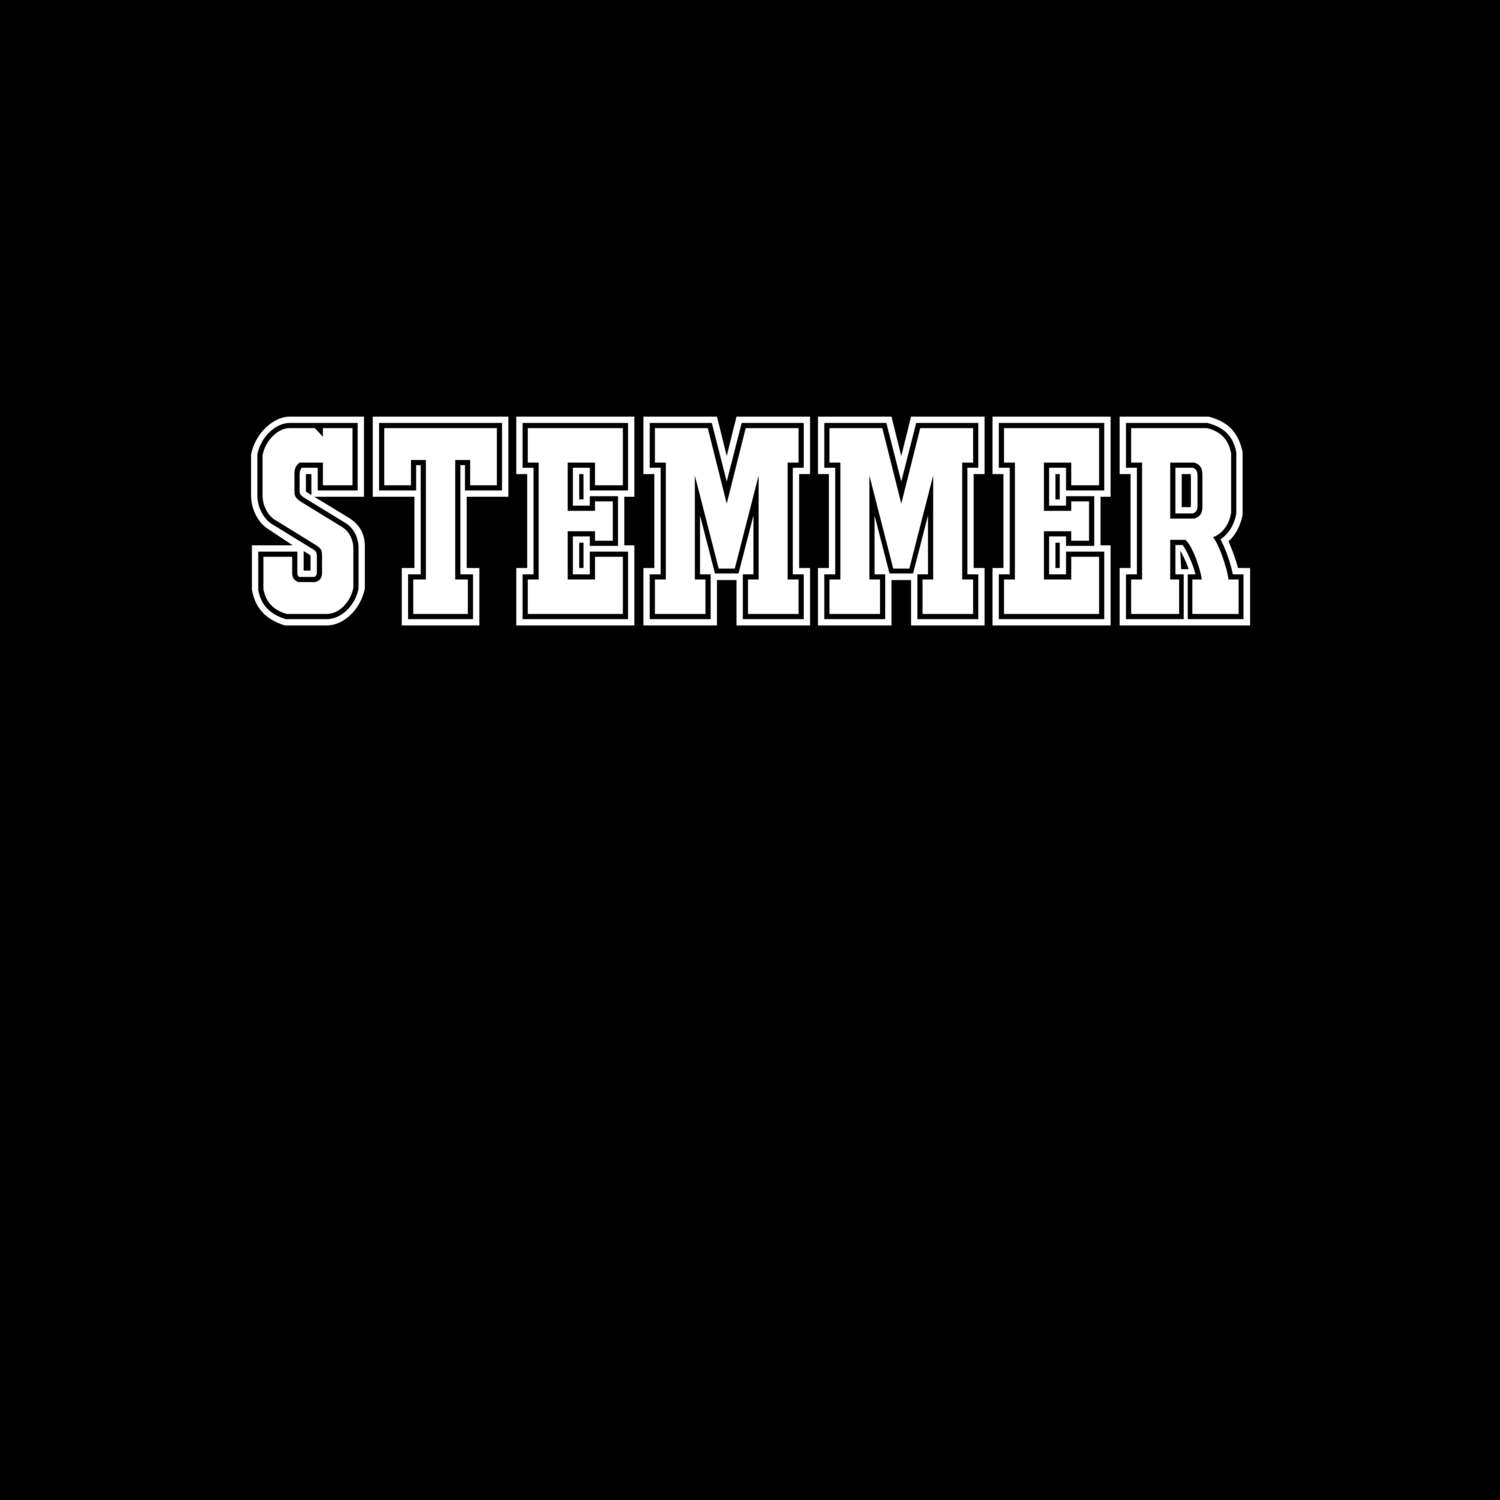 Stemmer T-Shirt »Classic«